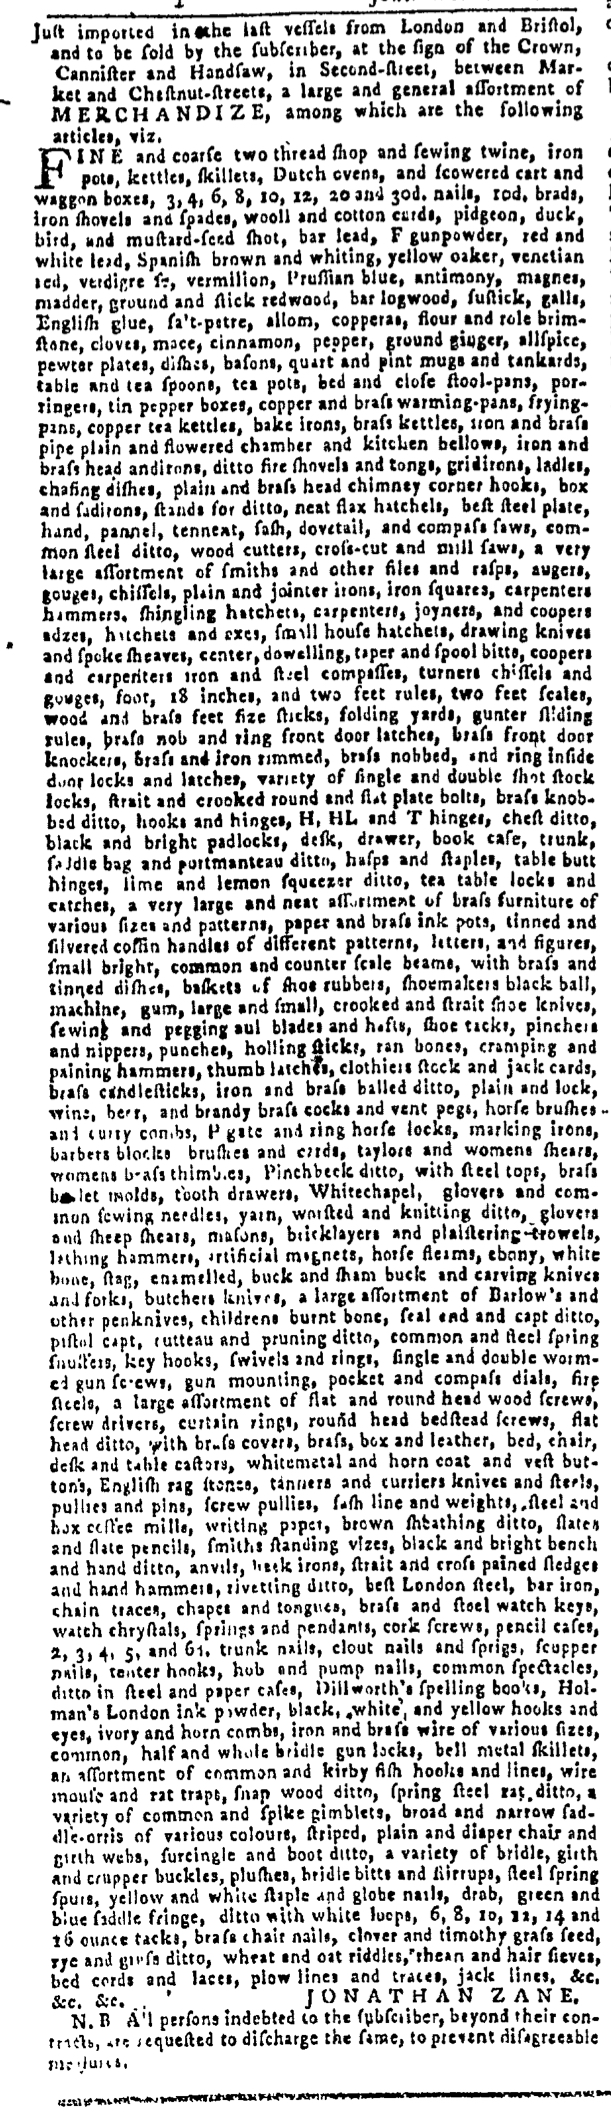 Oct 2 - 9:29:1768 Pennsylvania Gazette